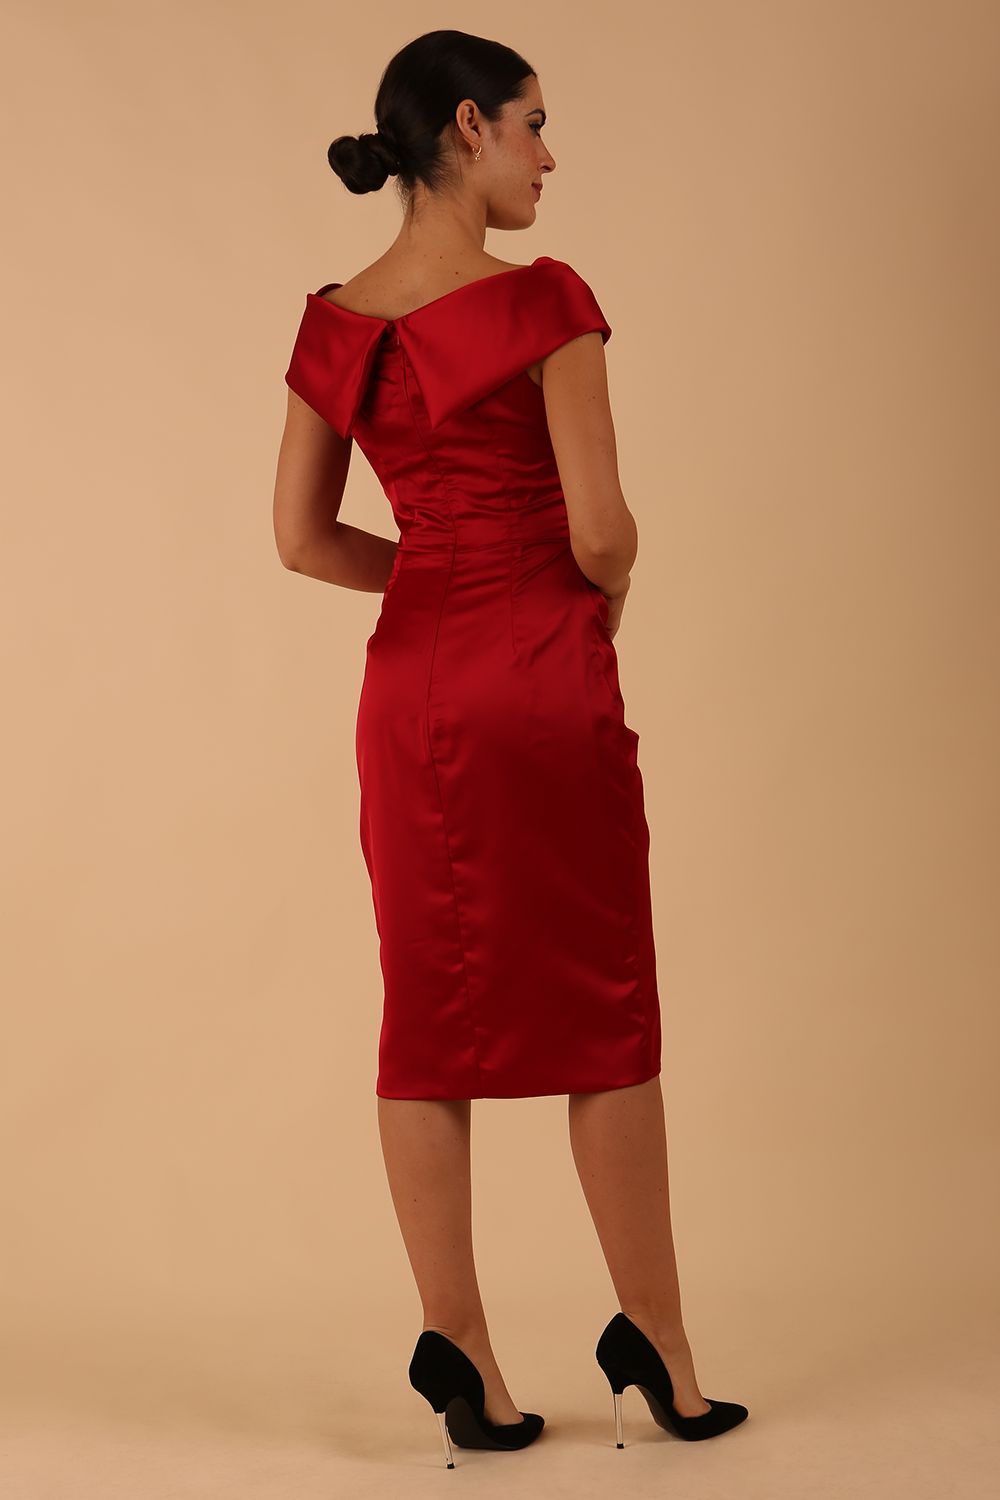 model is wearing diva catwalk casa blanca satin Haute Red pencil dress off shoulder design back